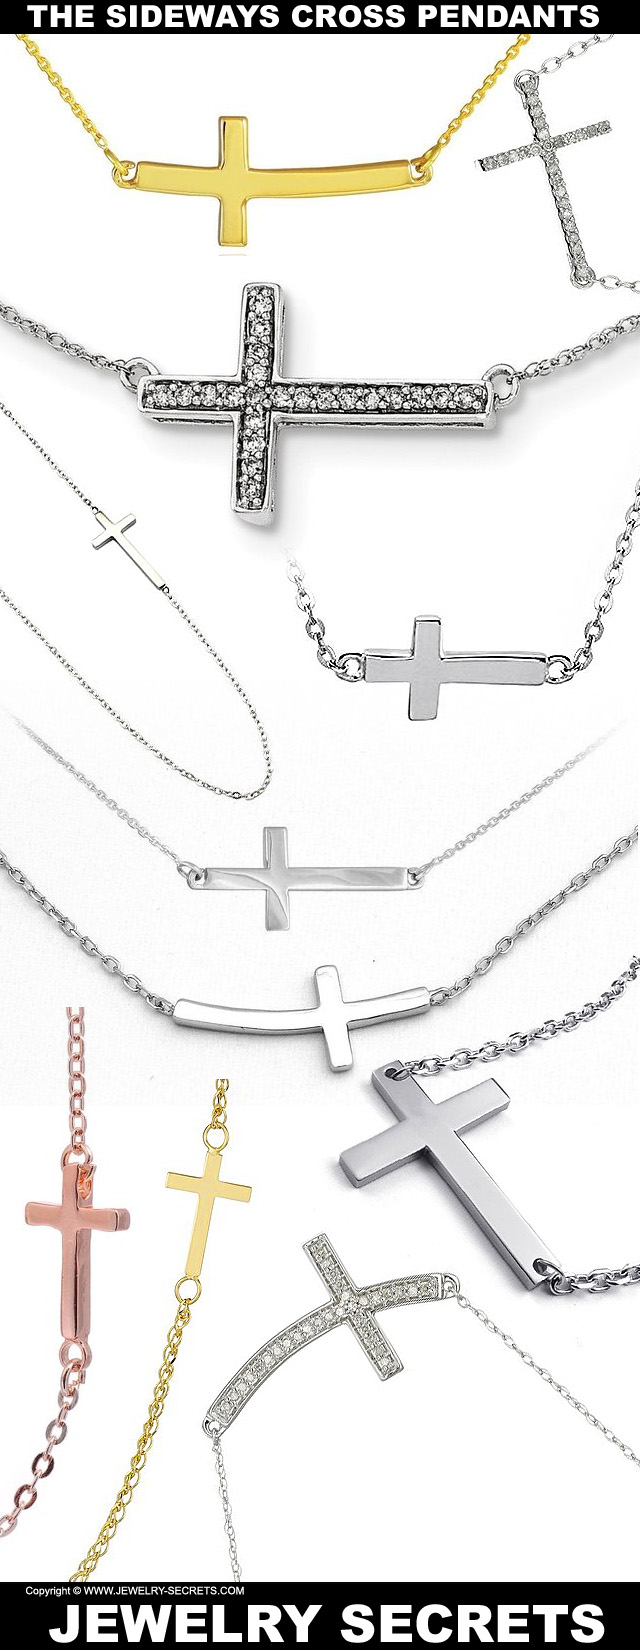 The Sideways Cross Pendant Necklace Jewelry